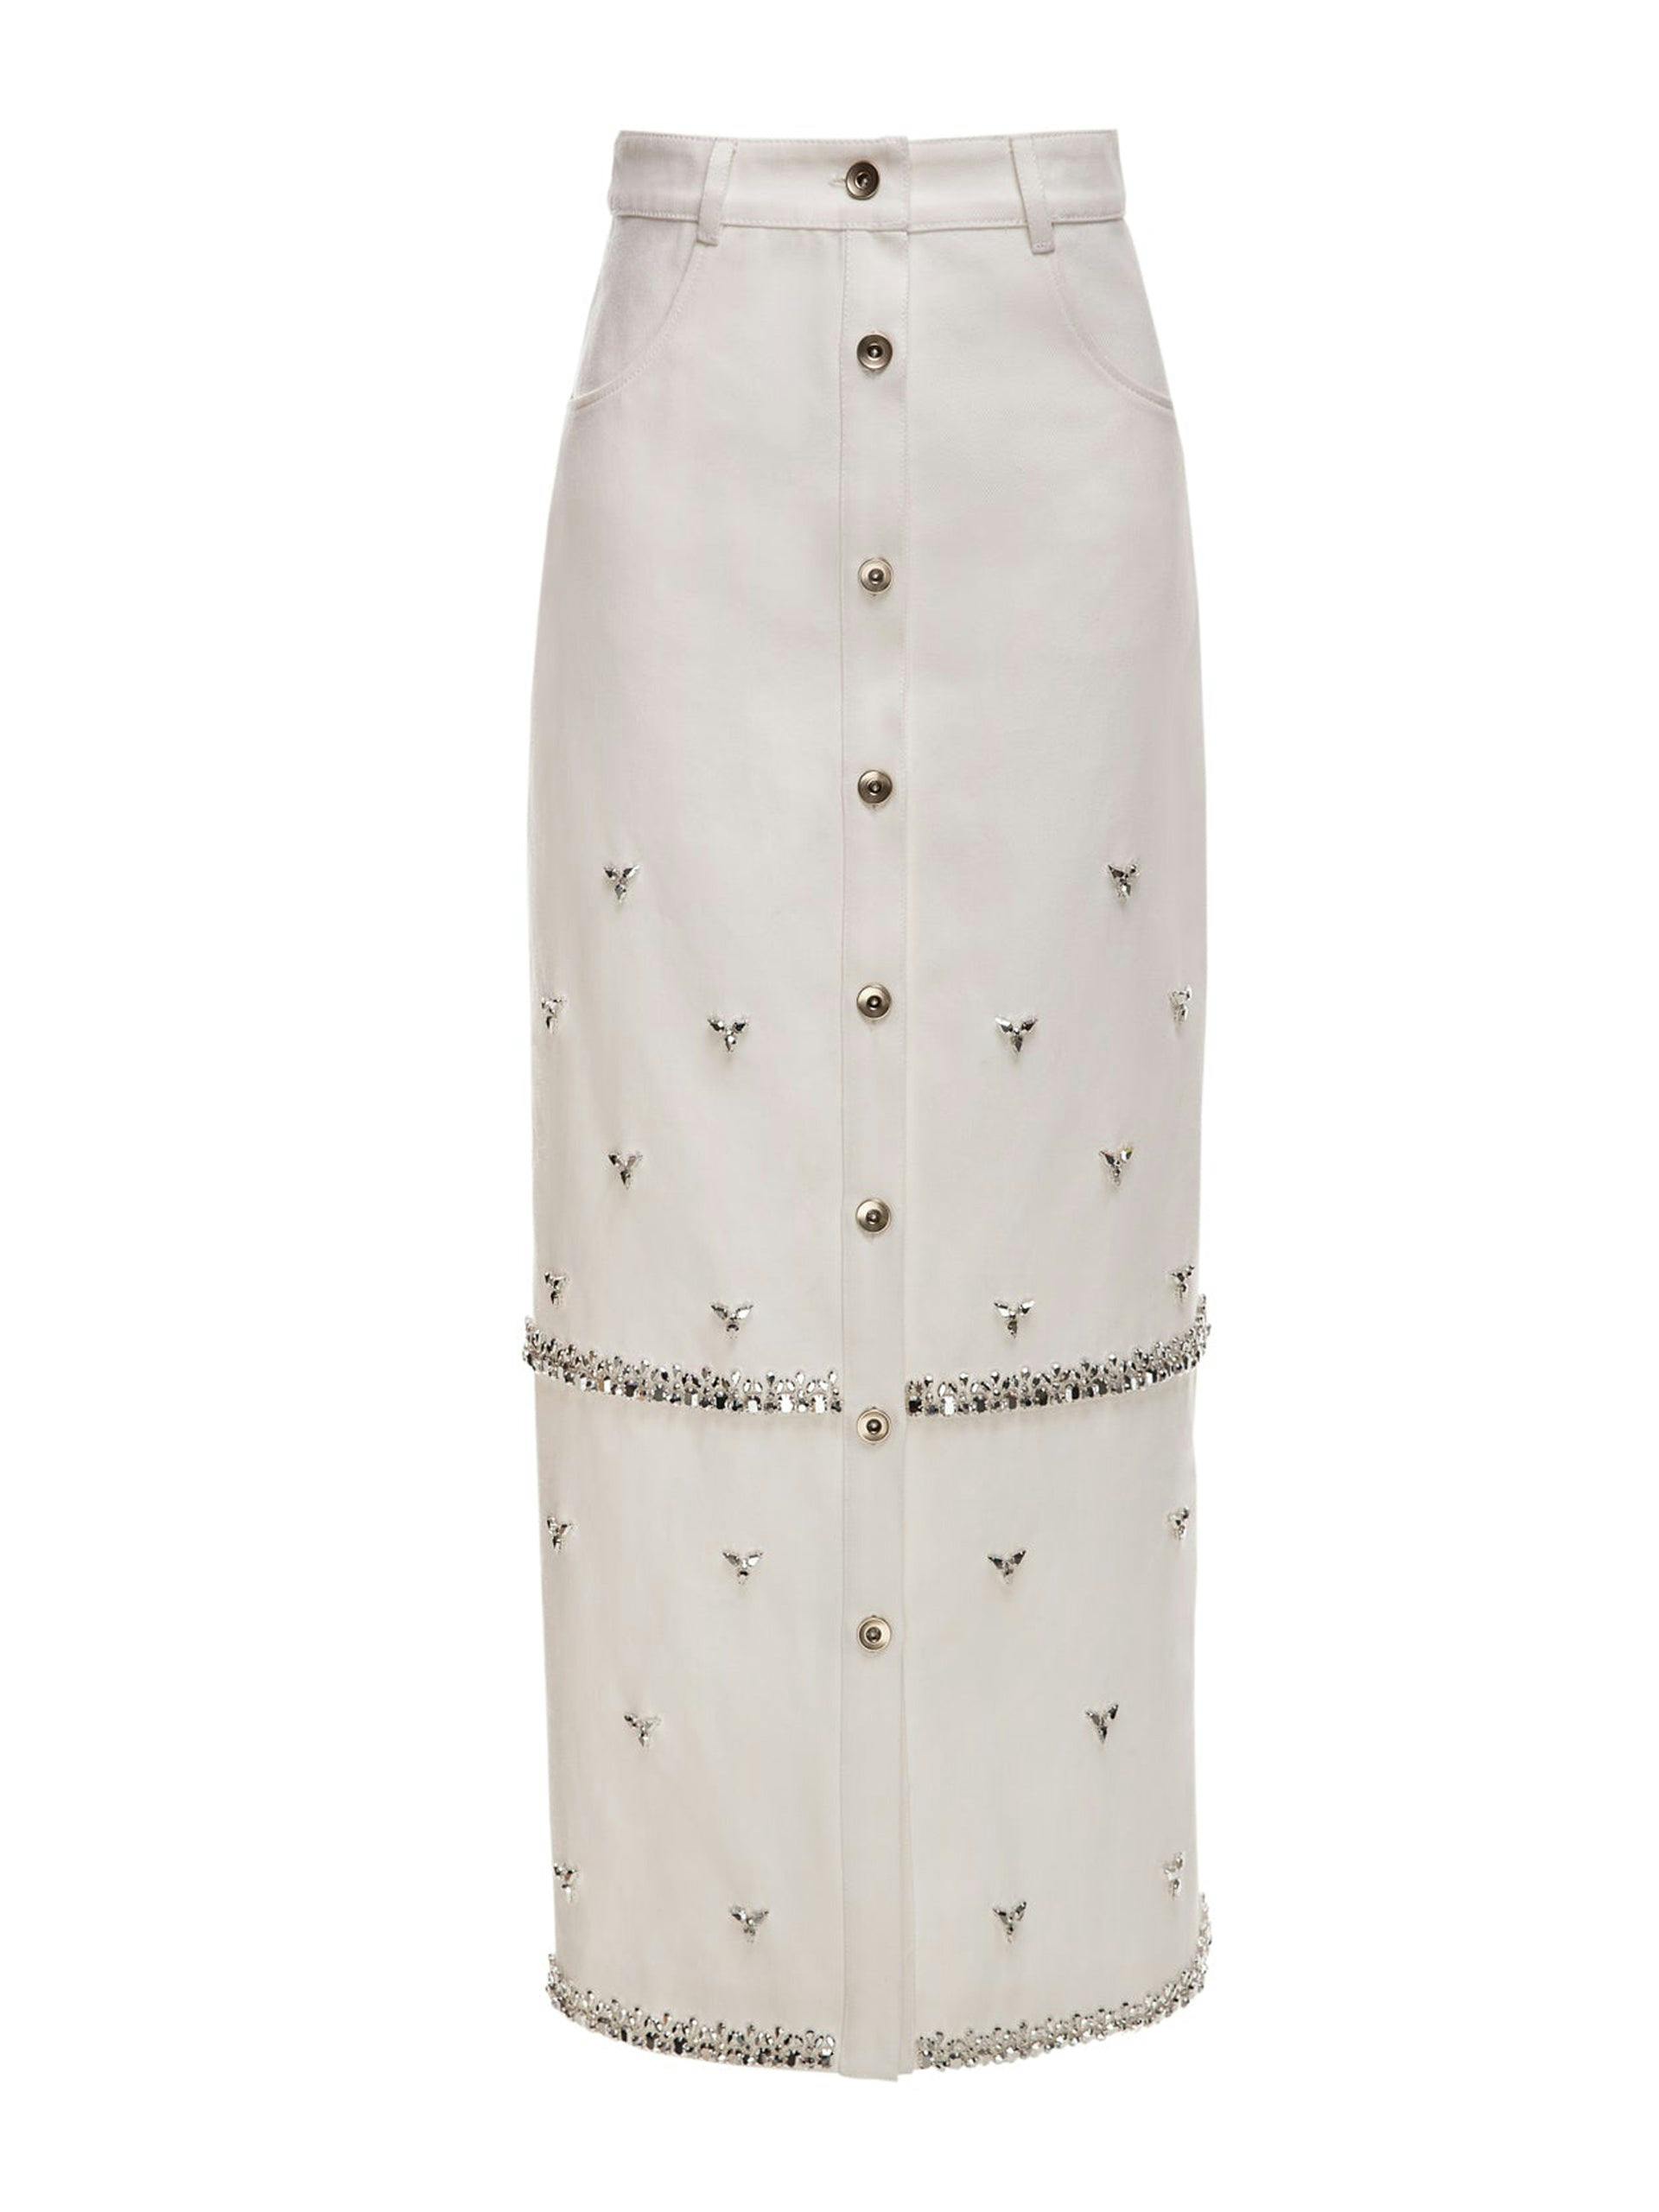 Levi white embellished denim skirt